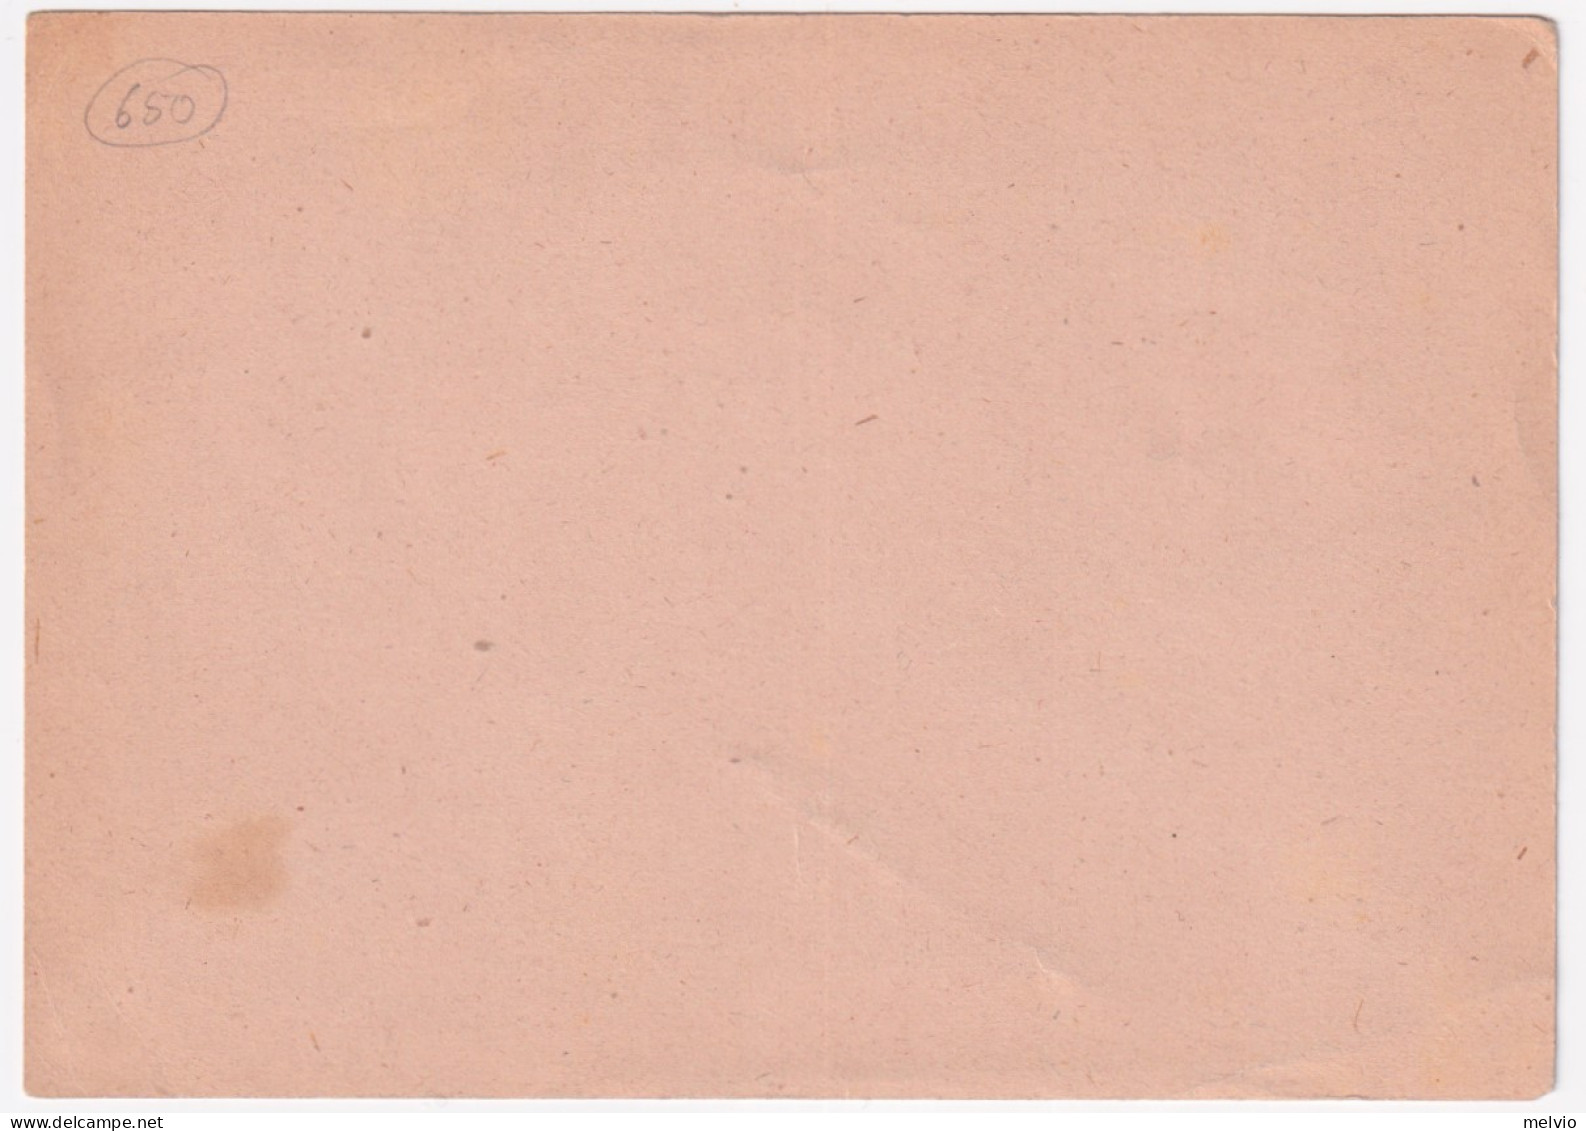 1946-Cartolina Postale Lire 3 Fiaccola (C131) Nuova - Stamped Stationery